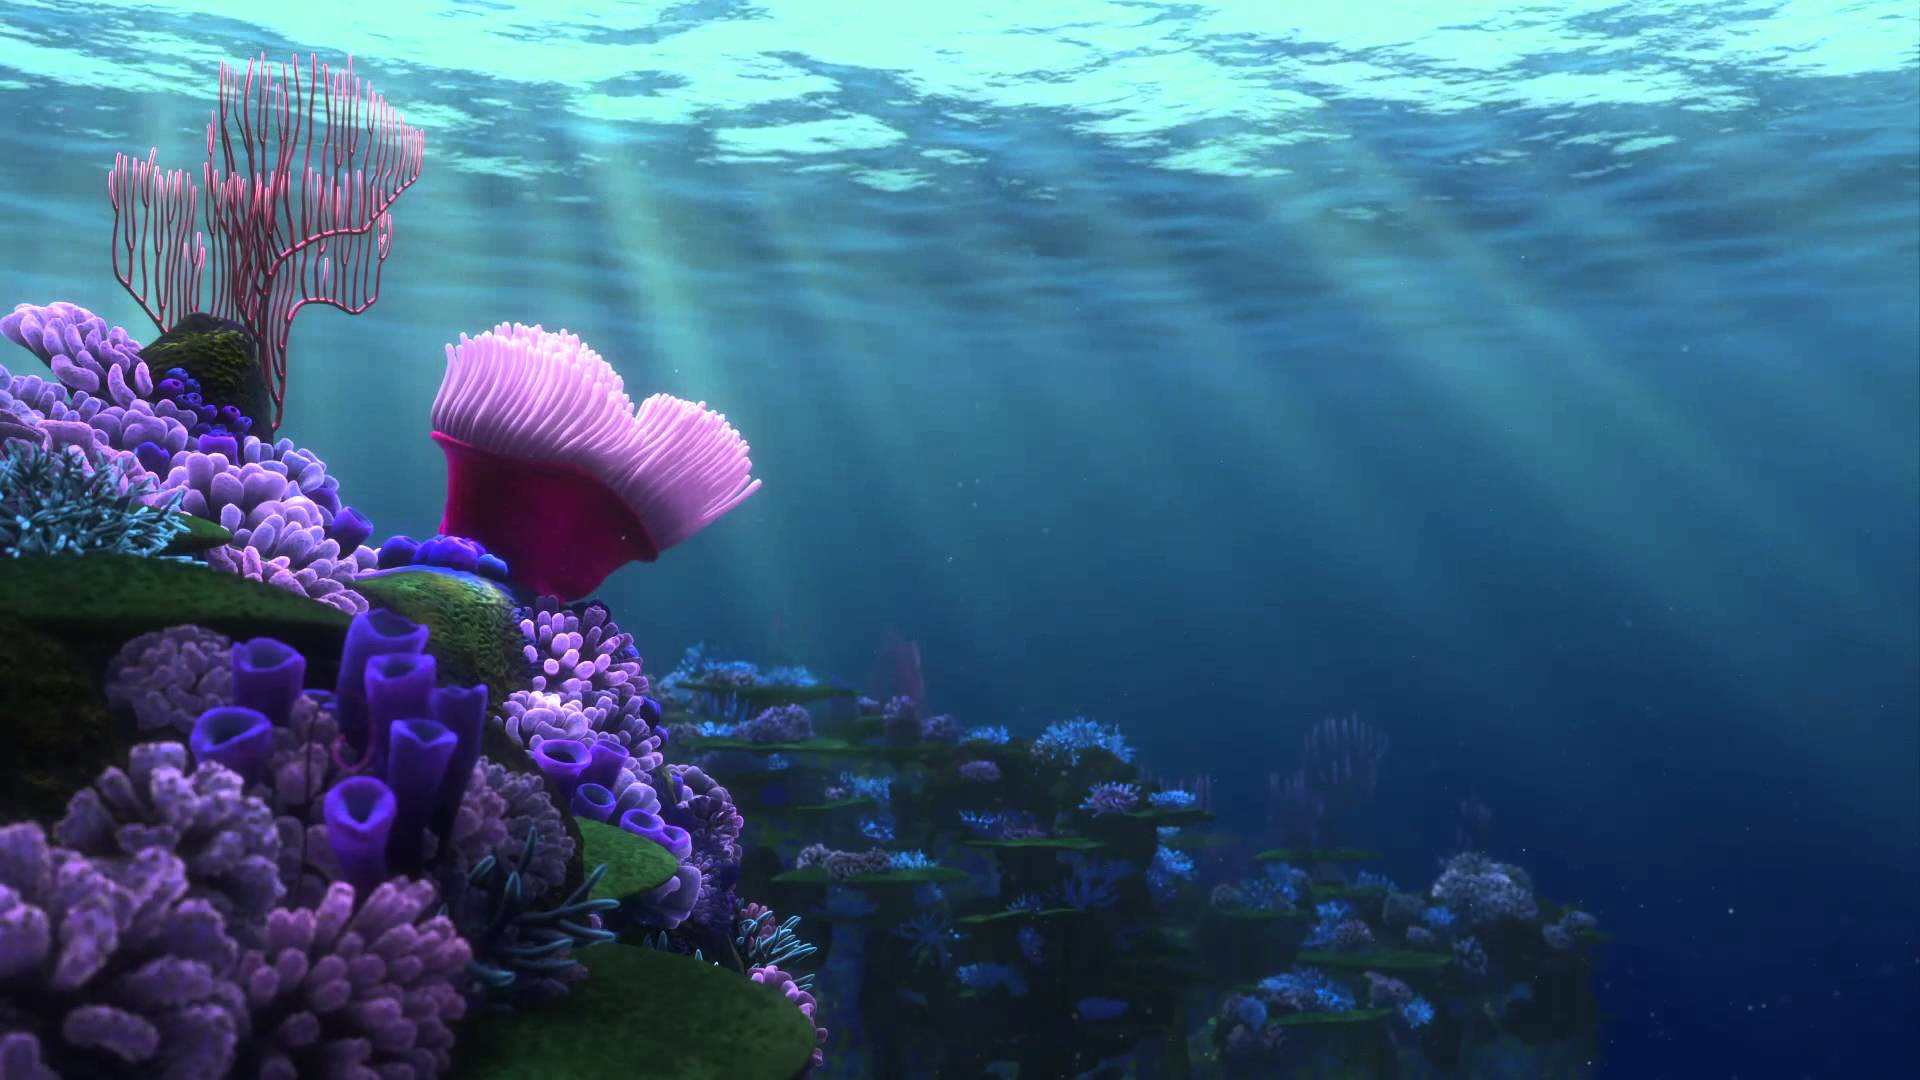  Download Finding Nemo Wallpaper HD by margaretm97 Finding Nemo 